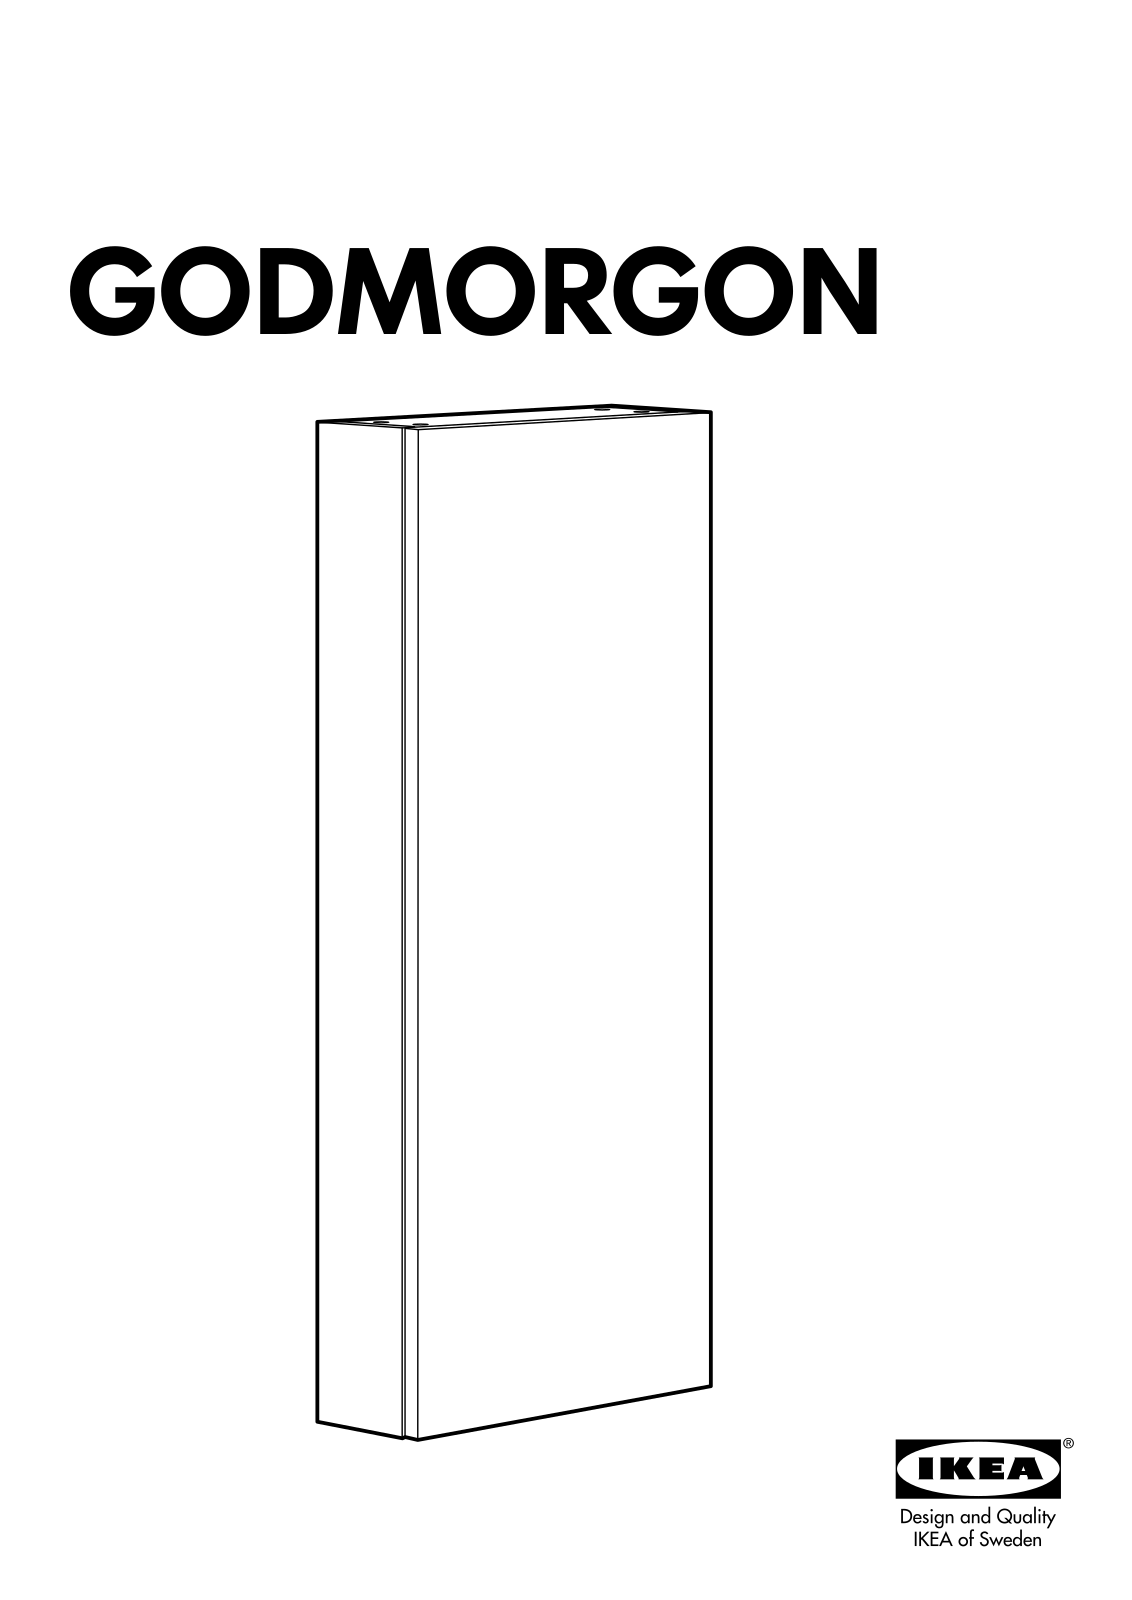 IKEA GODMORGON WALL CAB W/1 DR User Manual